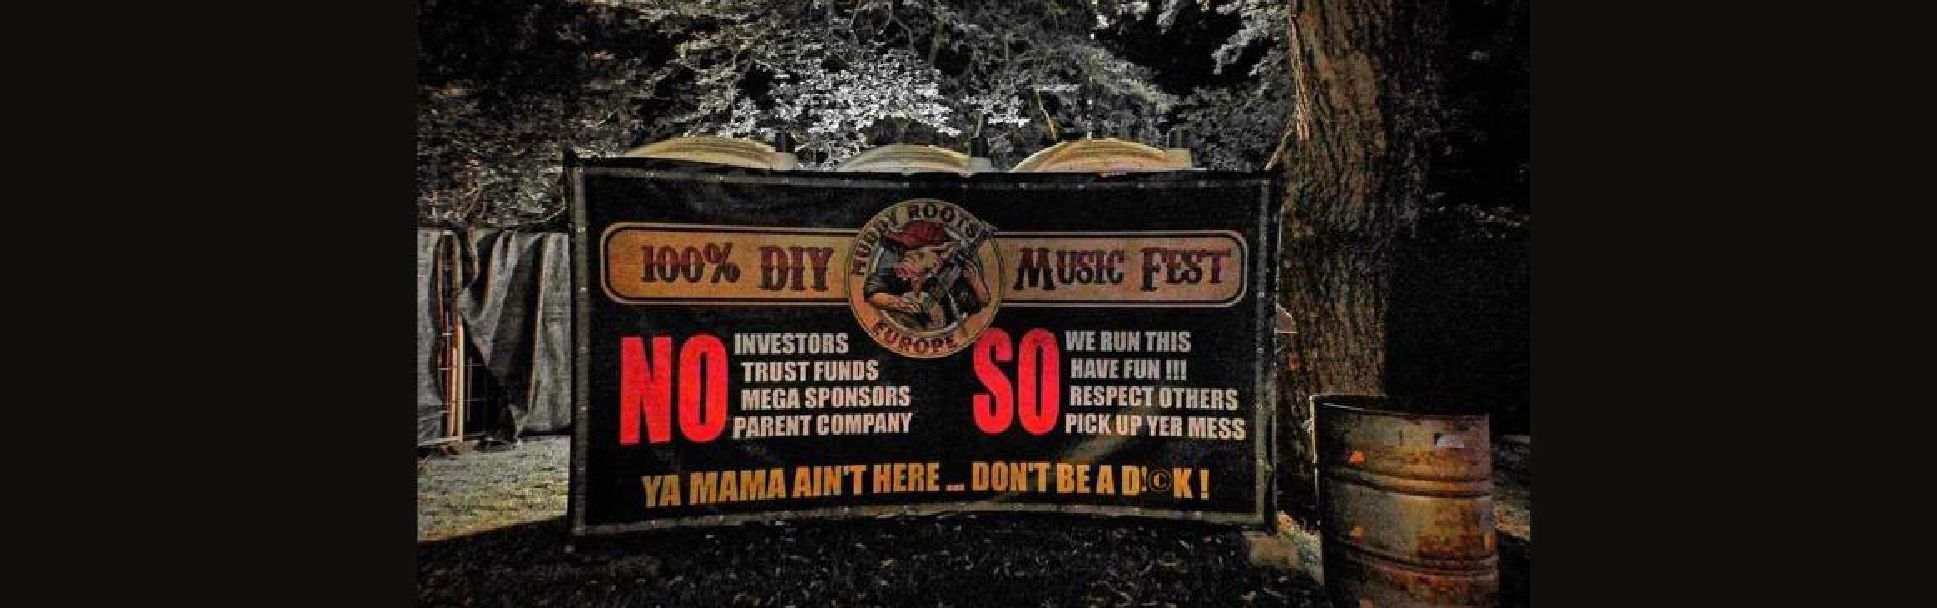 Muddy Roots Europe Music Festival header